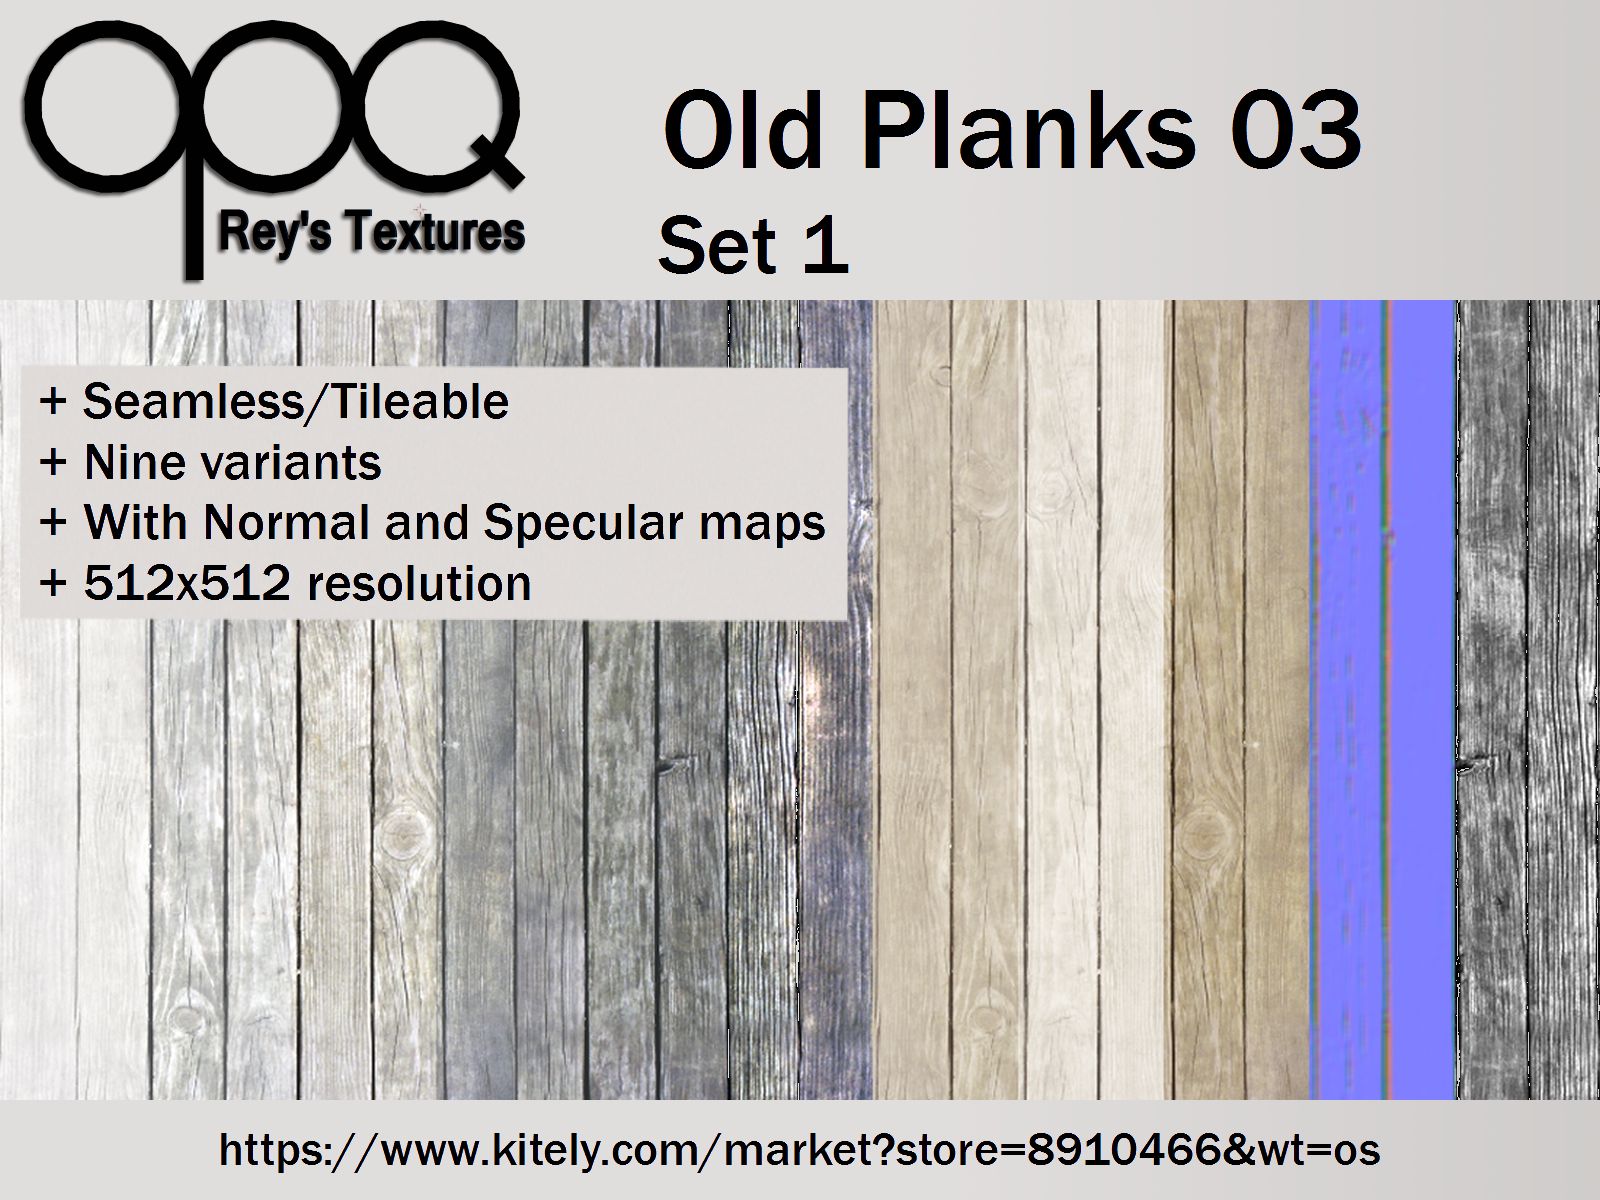 Rey's Old Planks 03 Set 1 Poster Kitely.jpg